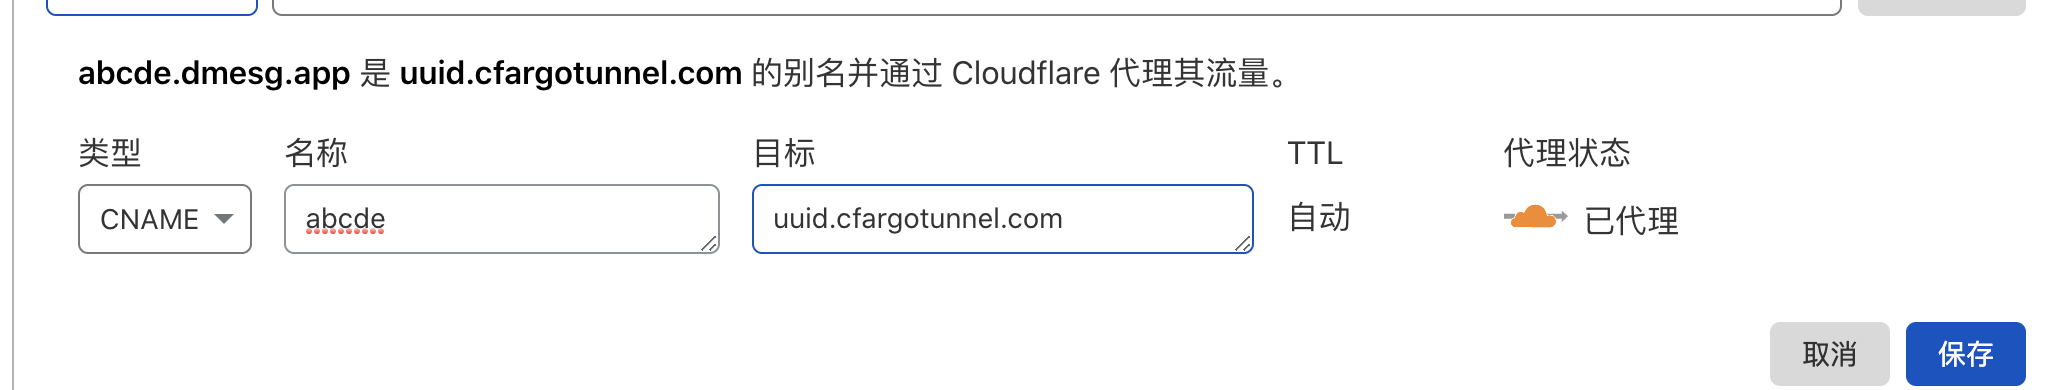 Cloudflare Argo Tunnel 小试：用树莓派做网站（老版本） - 万事屋 - Cloudflare银魂 - 科技改变生活 - 万事屋